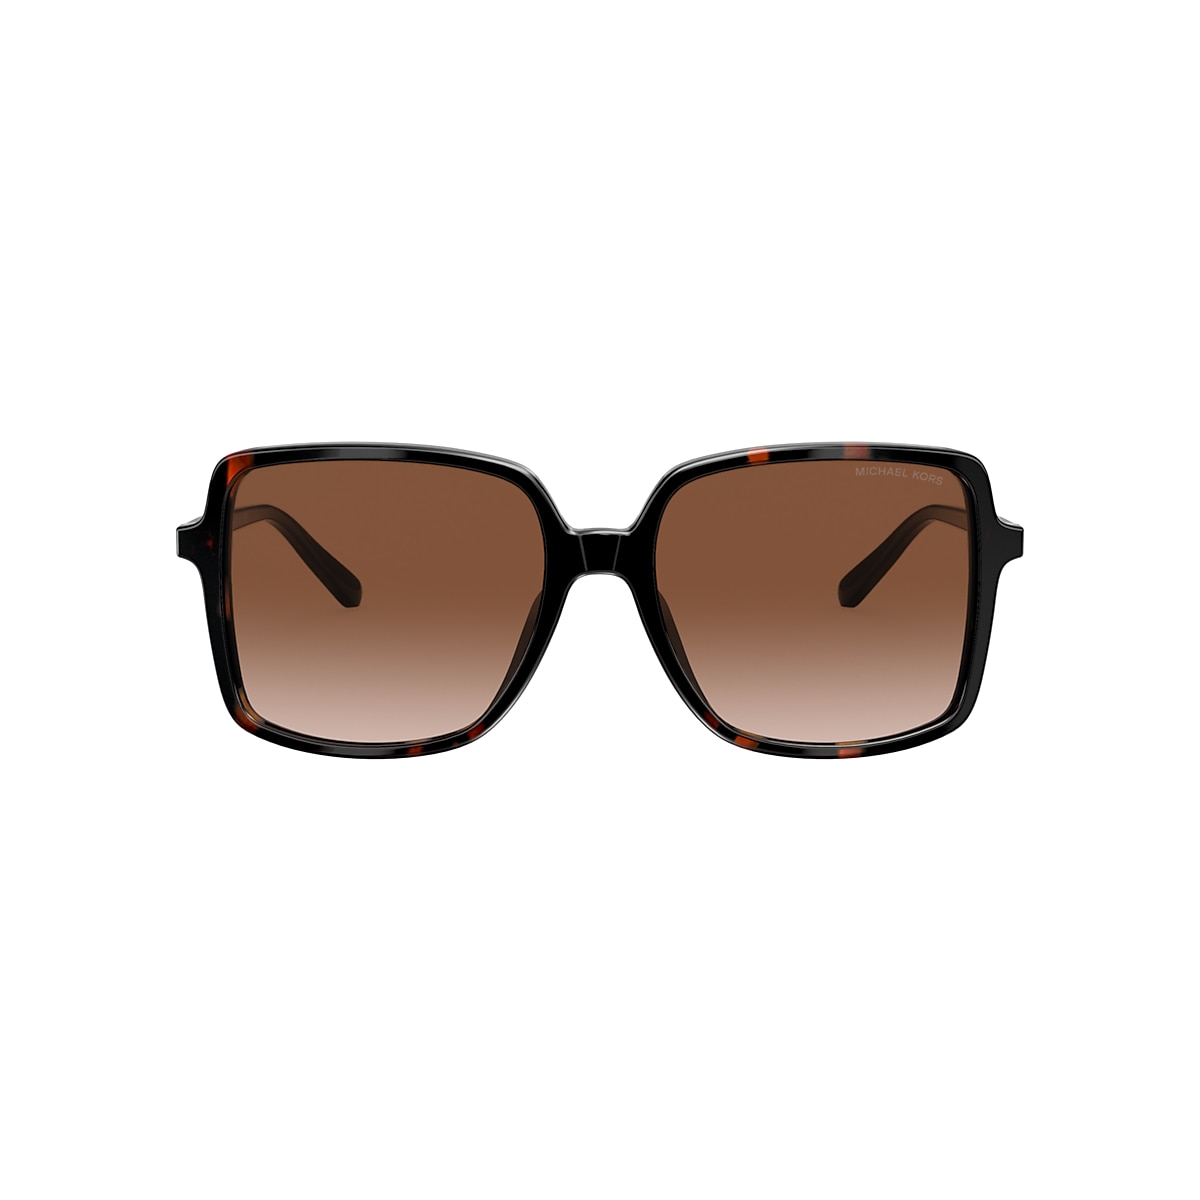 Luis 08uv c2 unisex sunglasses, brown- multi size: Buy Online at